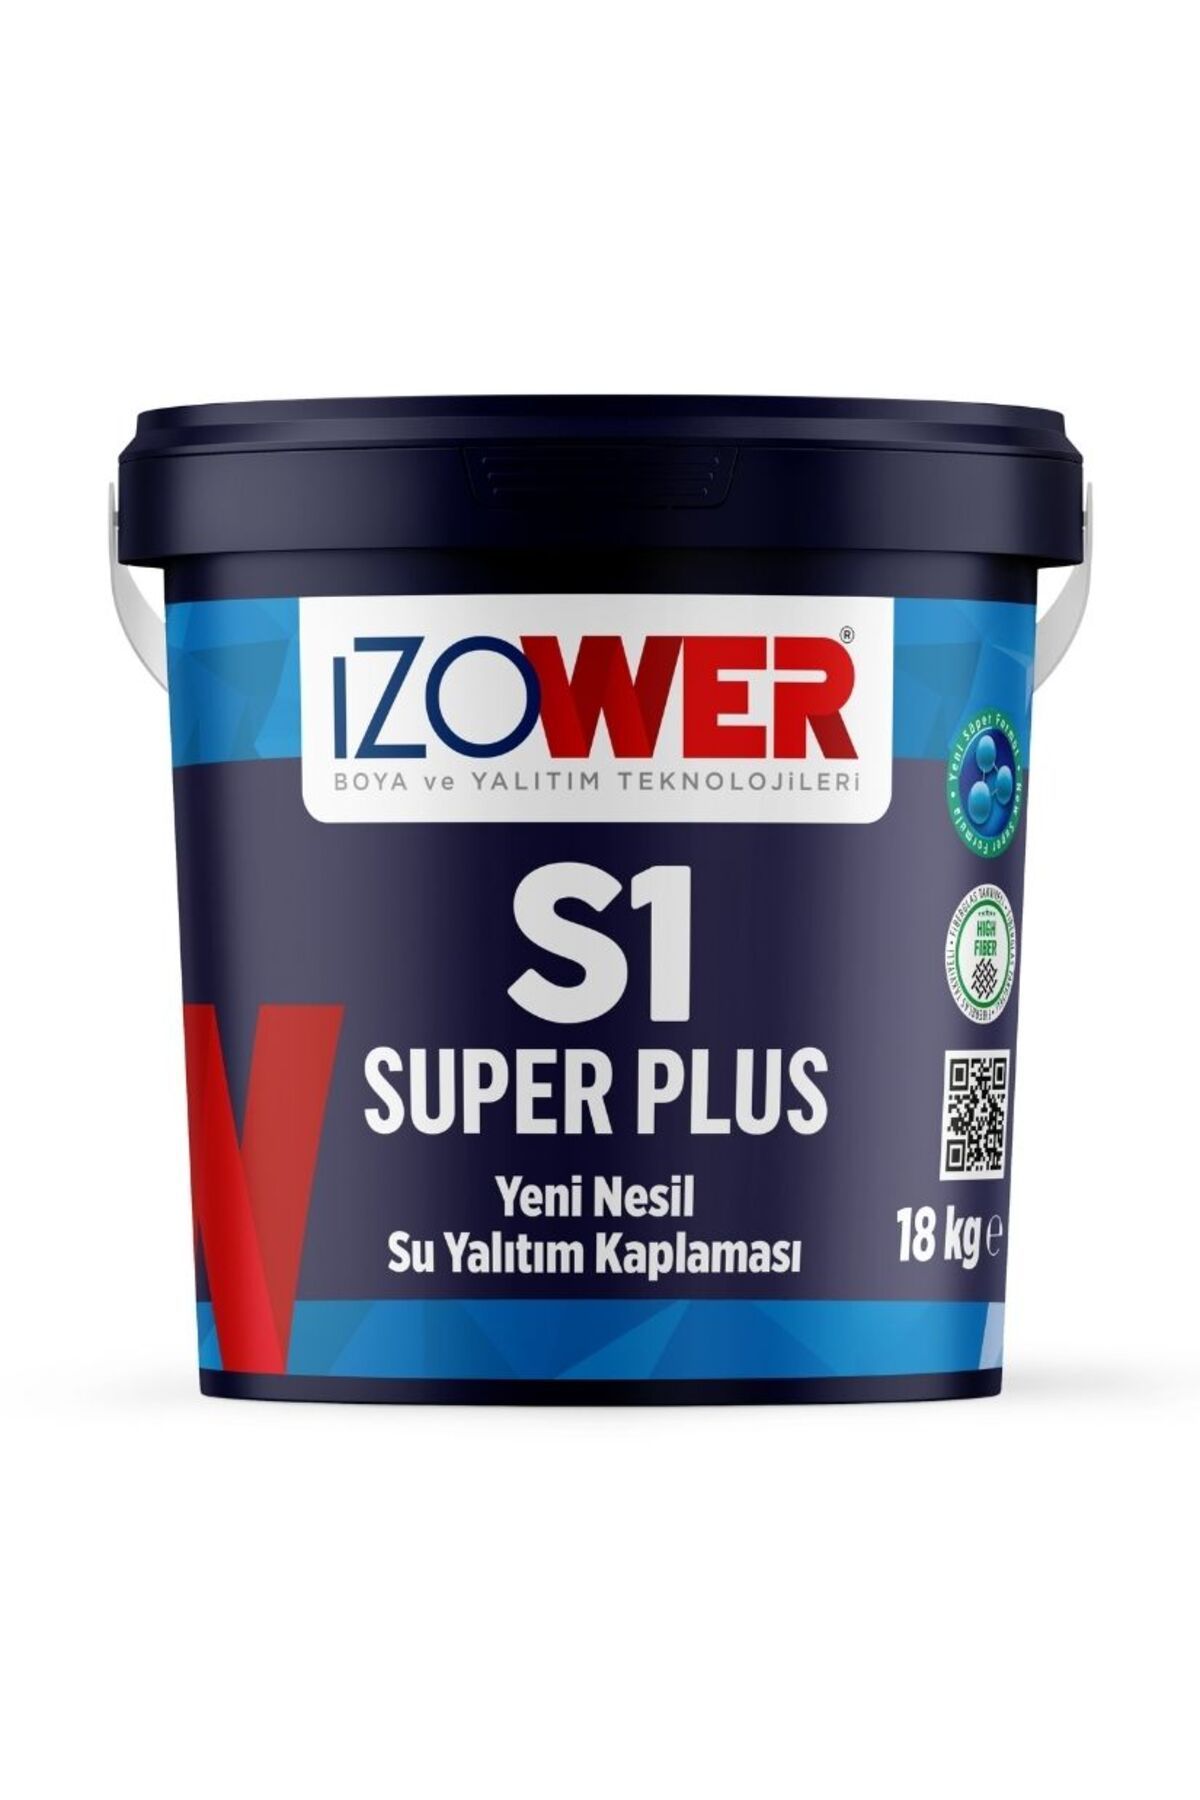 izower S1 Süper Plus Su Yalıtım Kaplaması- Kiremit Rengi- 18 Kg